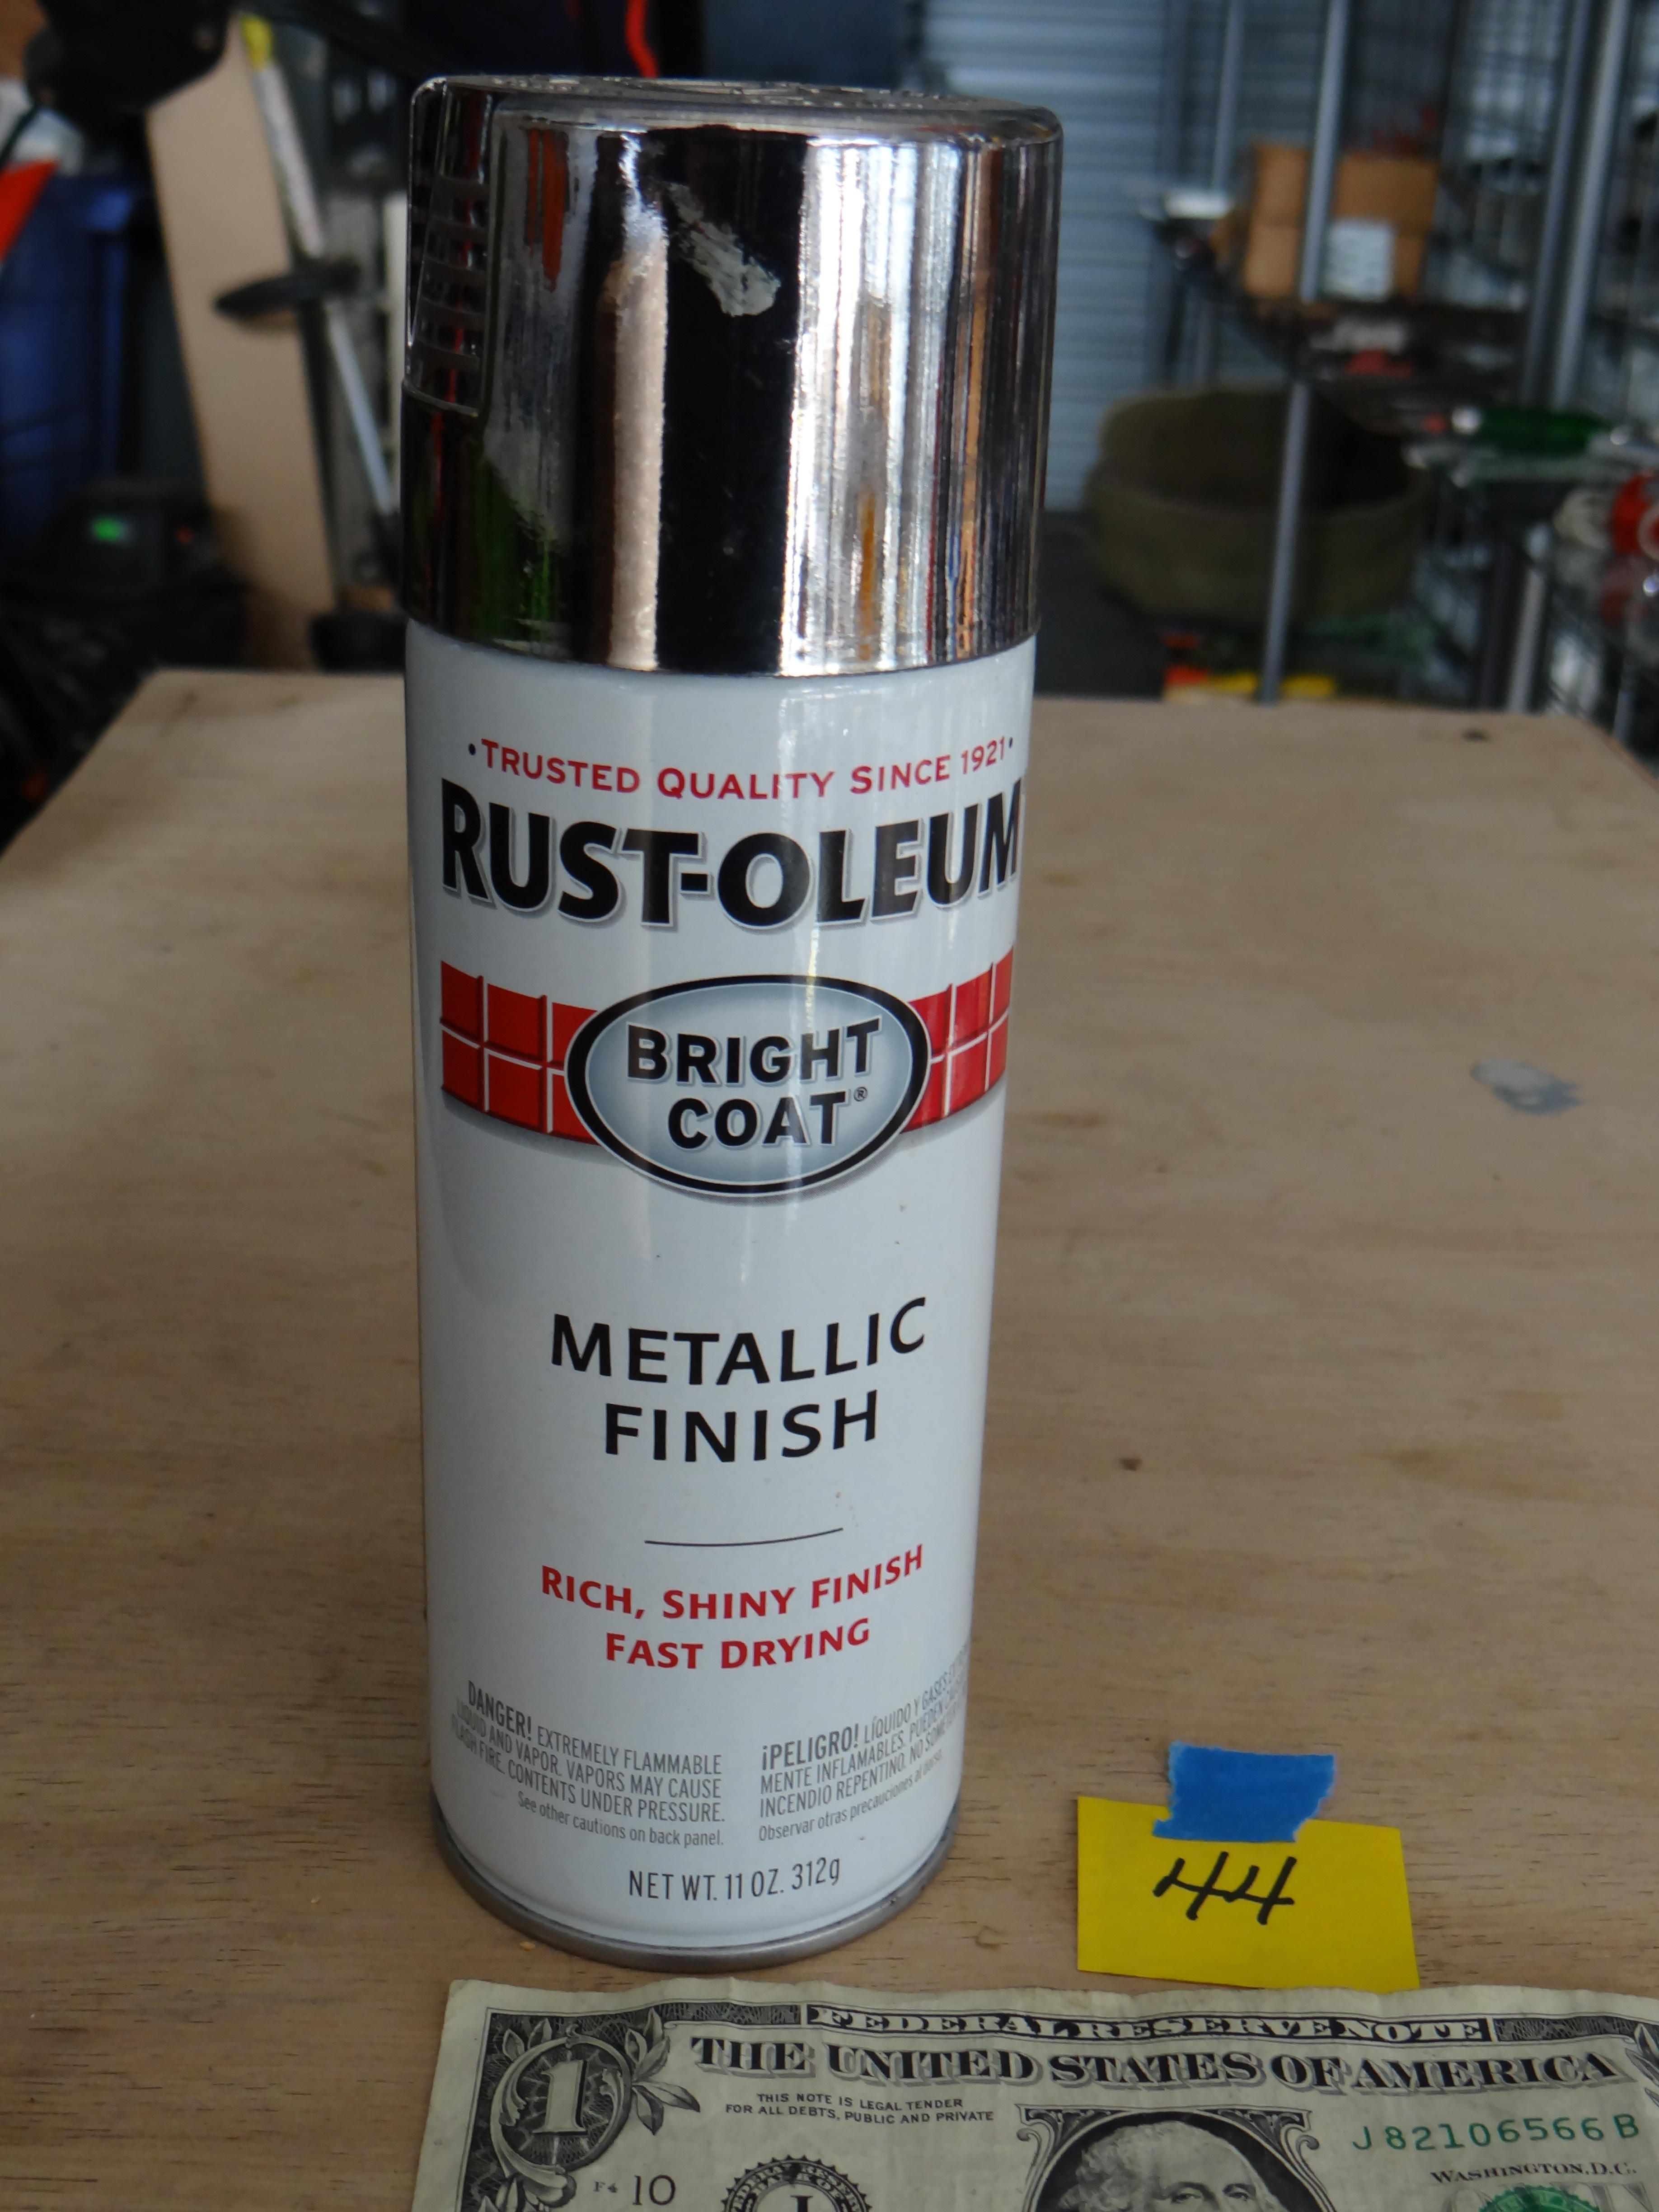 44-Rust-o-leum Silver Metallic Finish Spray Paint Seems Full